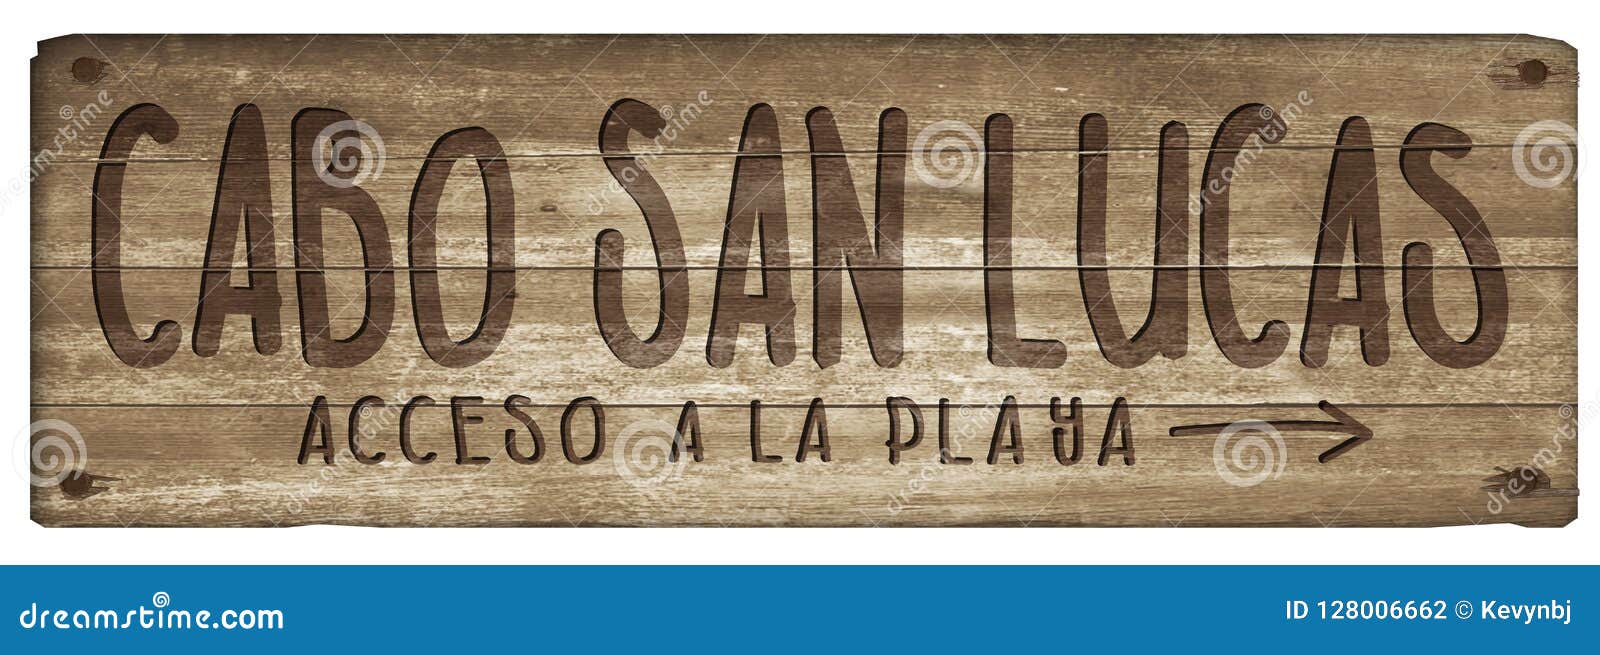 cabo san lucas mexico beach sign wood vintage